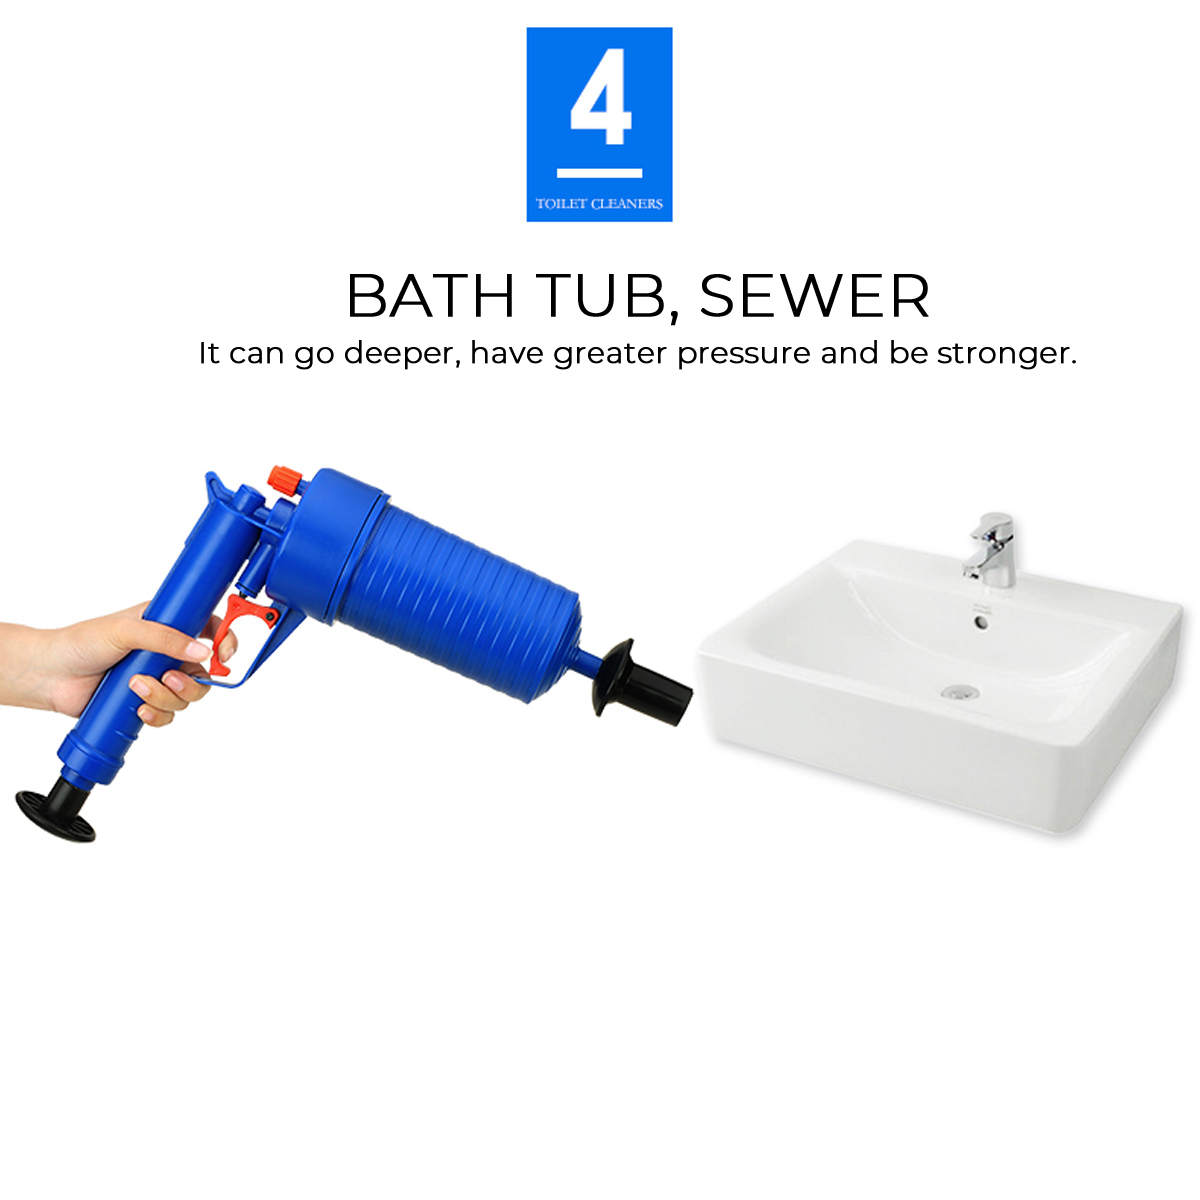 Air-Pump-Drain-Sink-Plunger-Bathroom-Toilet-Sewer-Blockage-Remover-Unblocker-1568102-7